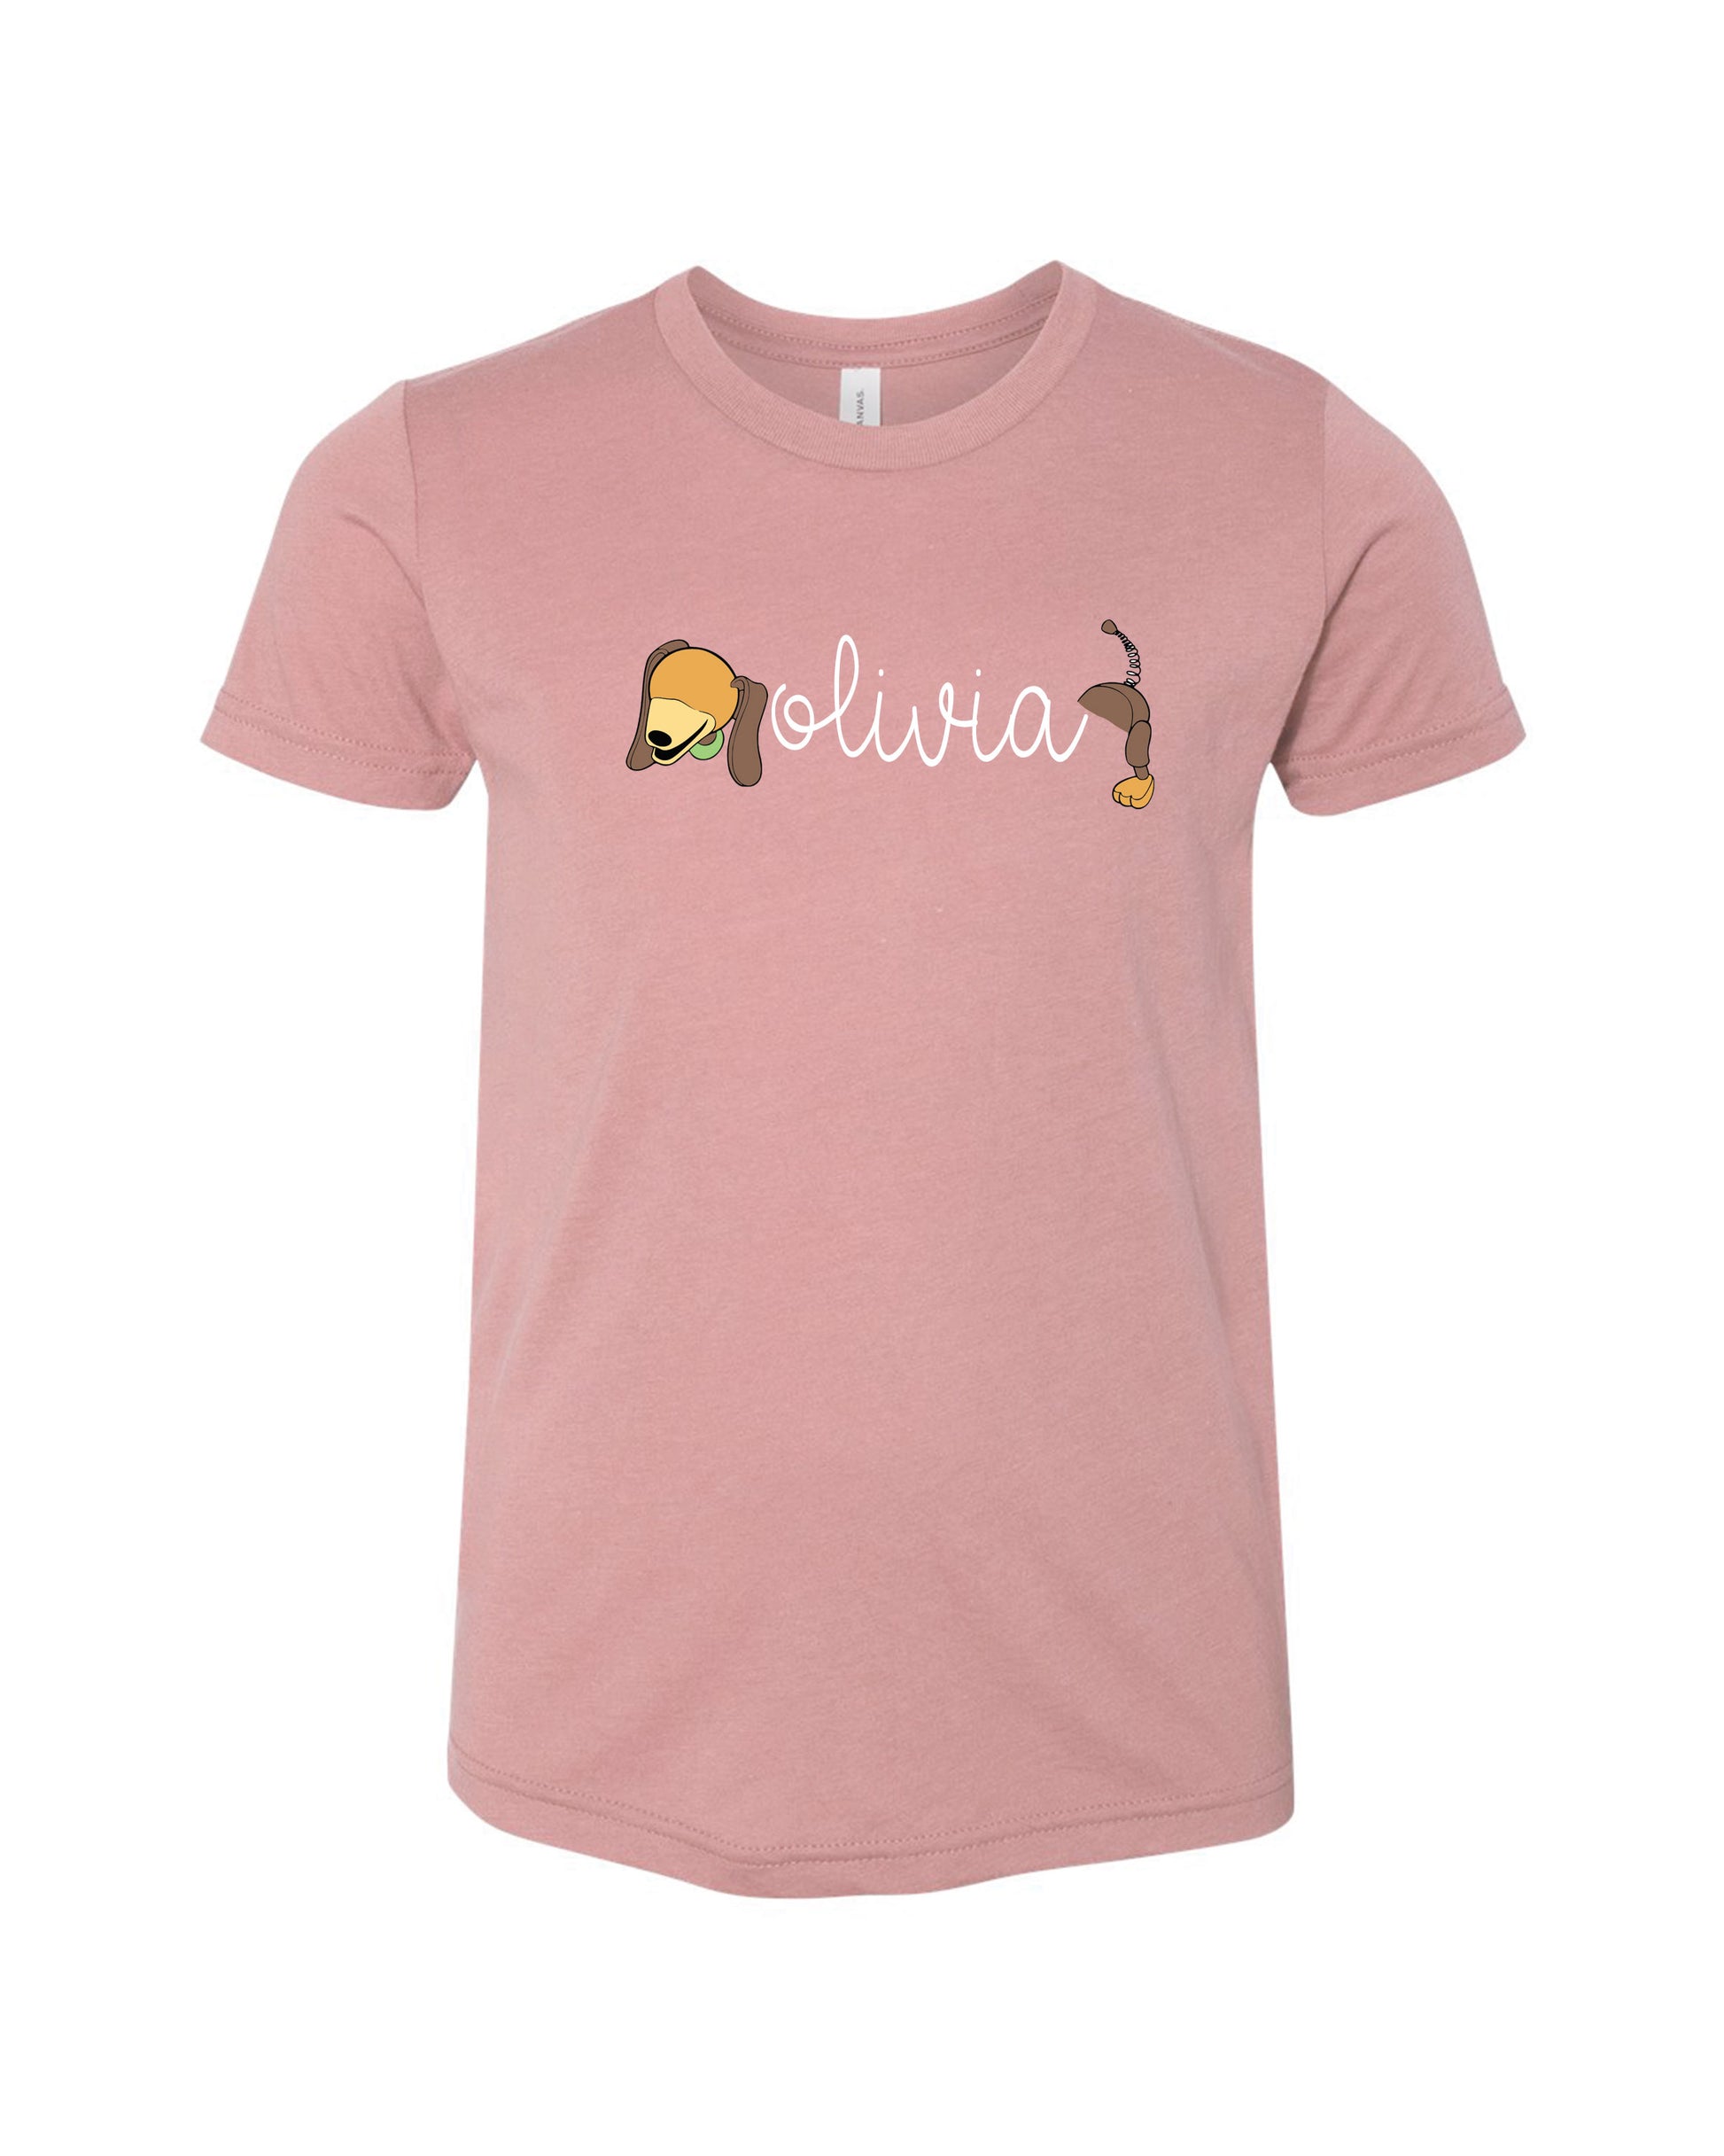 Slinky Dog | Tee | Kids-Kids Tees-Sister Shirts-Sister Shirts, Cute & Custom Tees for Mama & Littles in Trussville, Alabama.